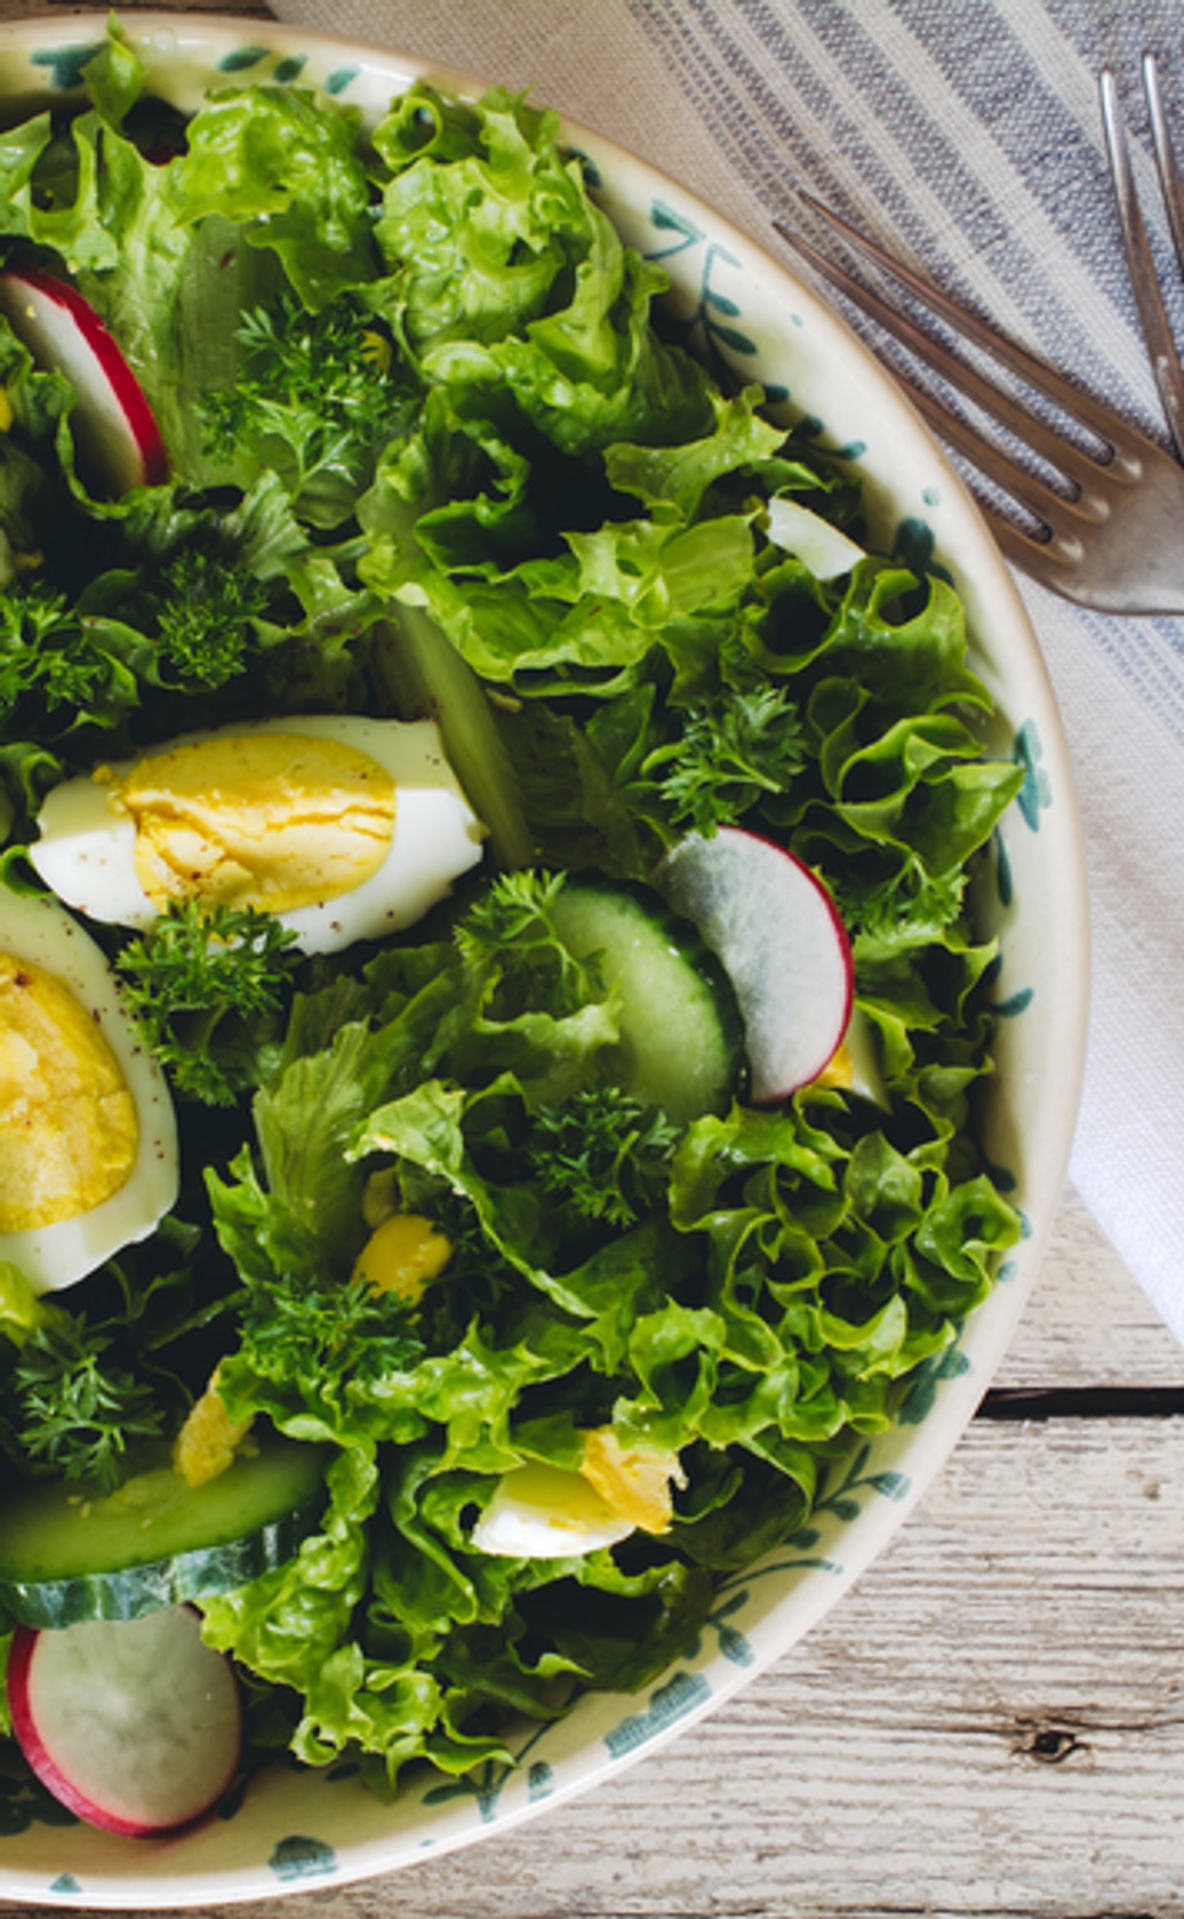 Parsley Coach Jackie's BYO Lunch Salad Recipe - Parsley Health